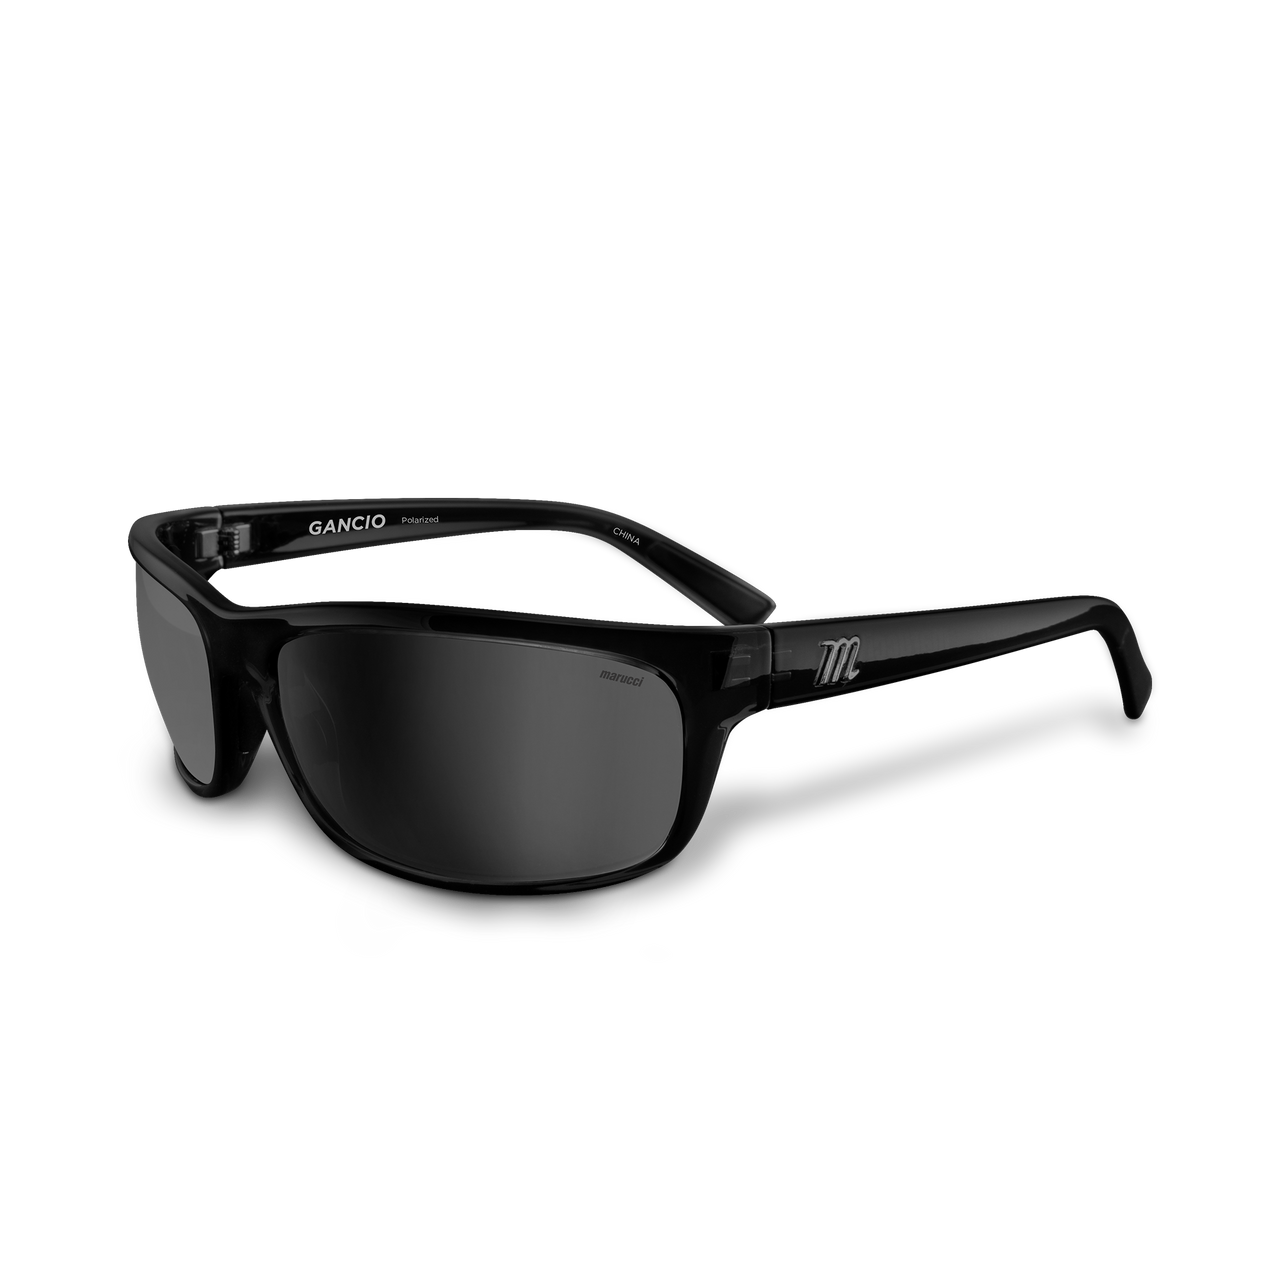 Marucci Gancio Lifestyle Sunglasses - Translucent Black Translucent - Gray Lens With Blue Mirror- Polar 